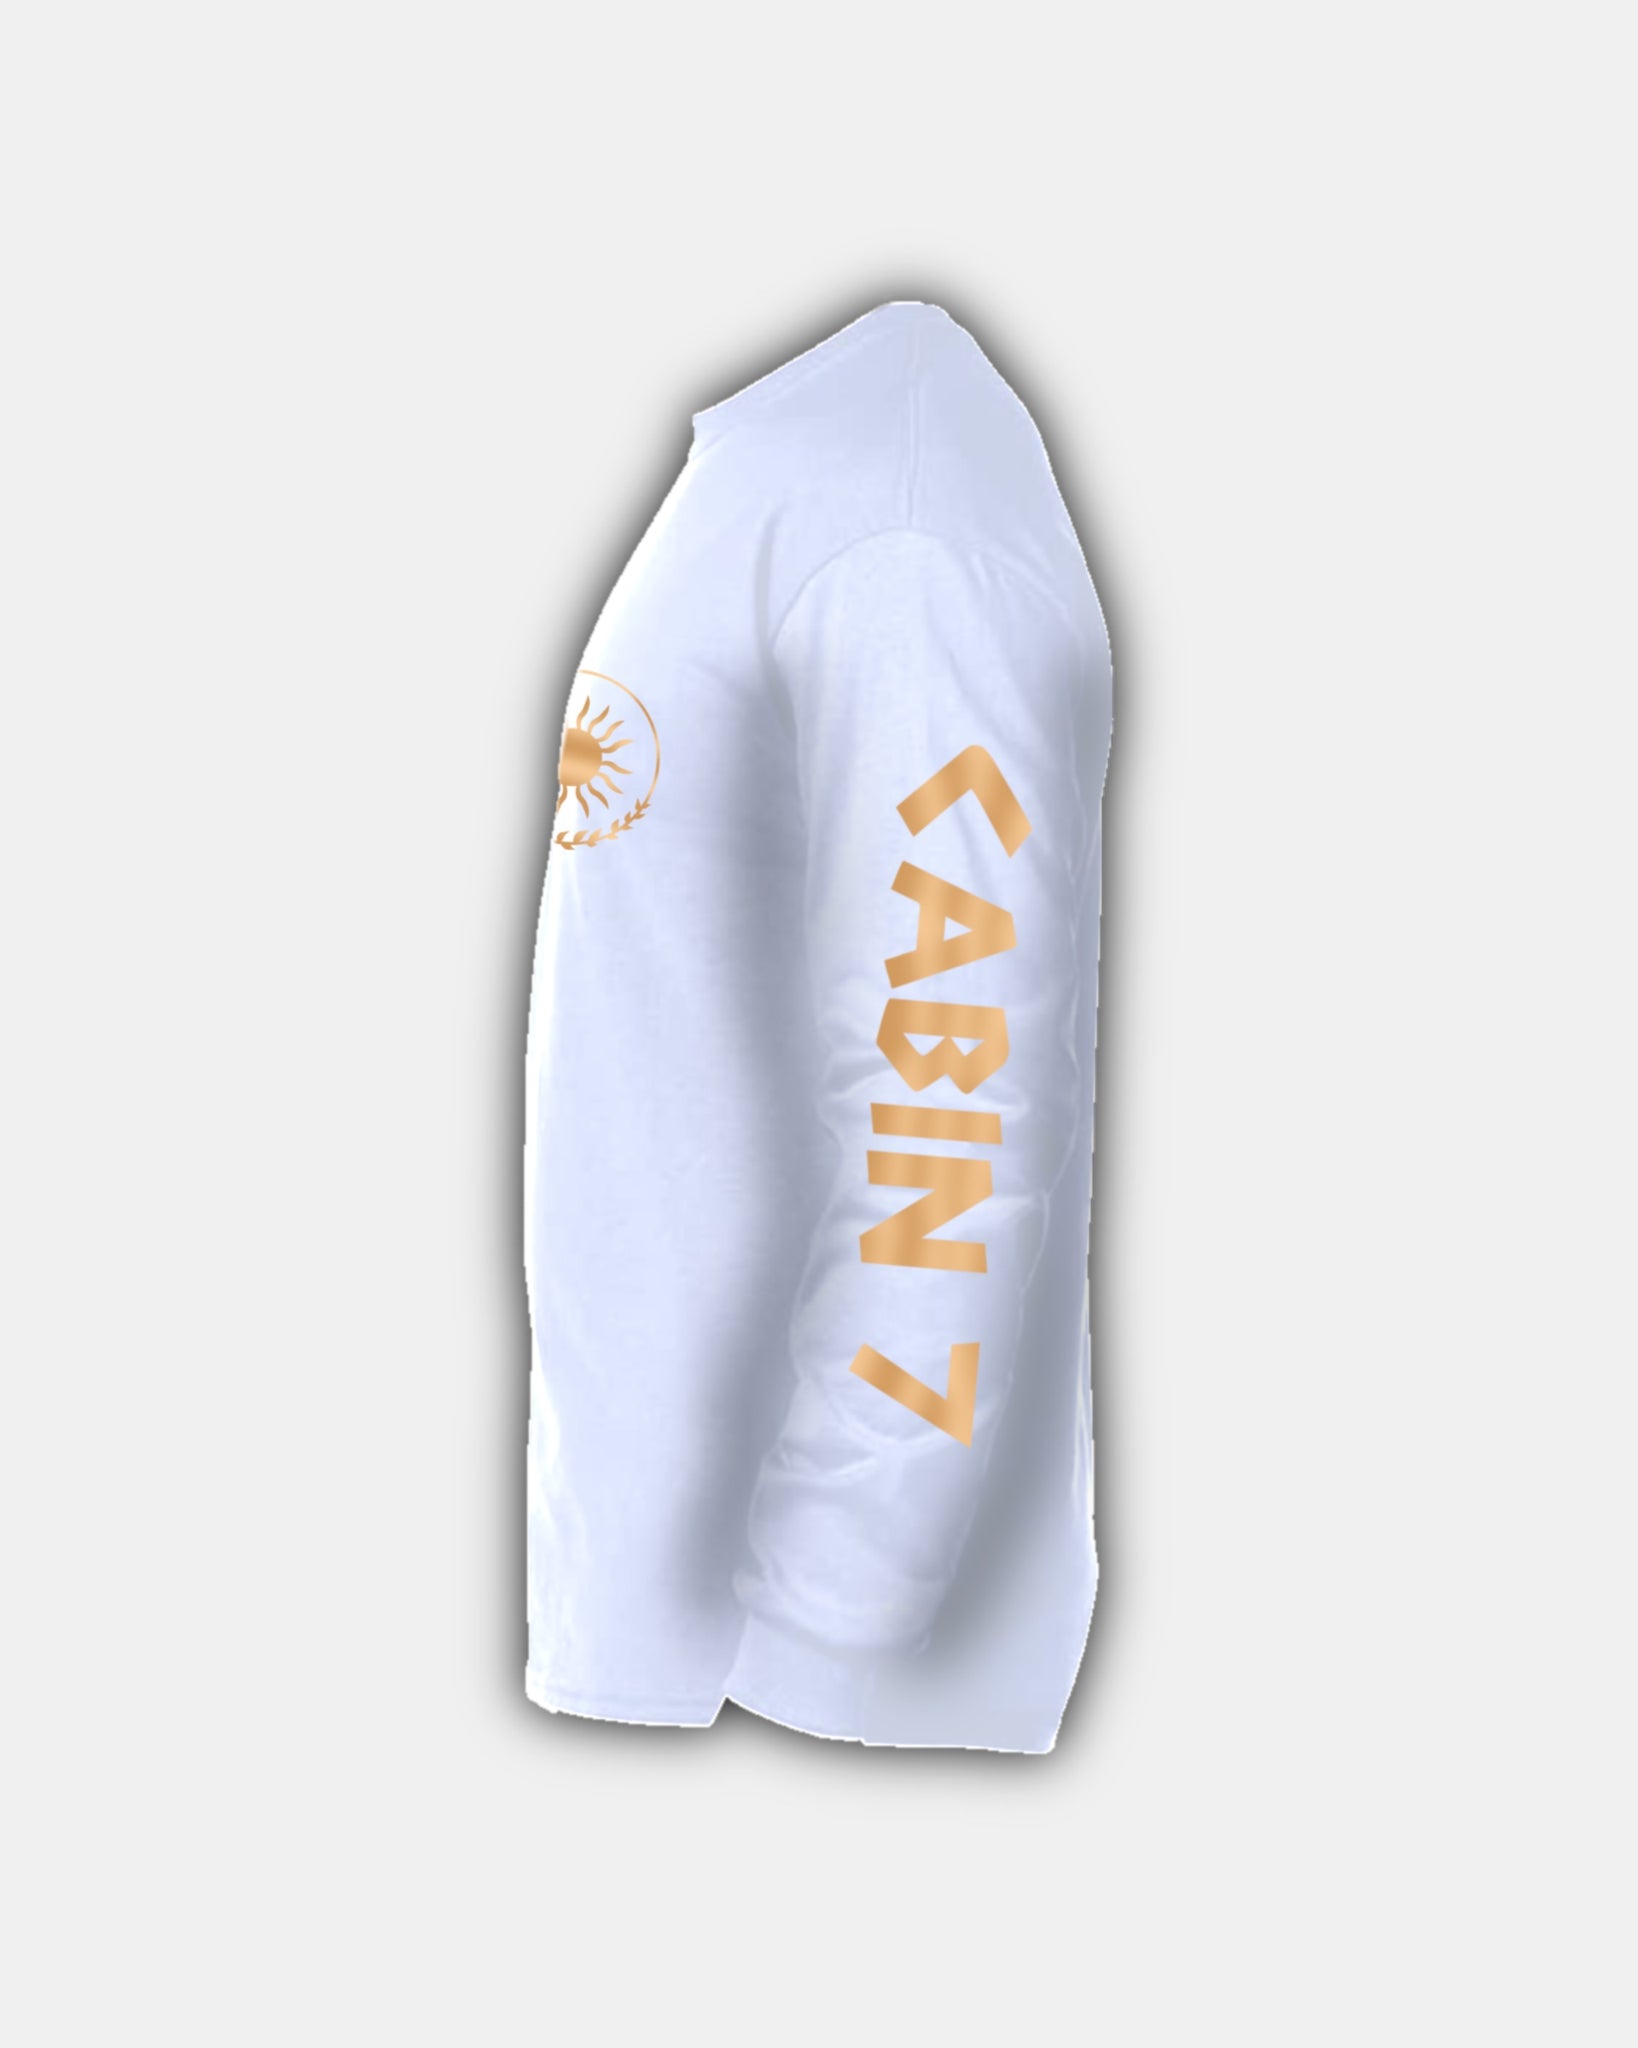 Camp Half-Blood - New Pegasus Design - Classic Fit T-Shirt UNISEX Oran –  SHOP DisBeans